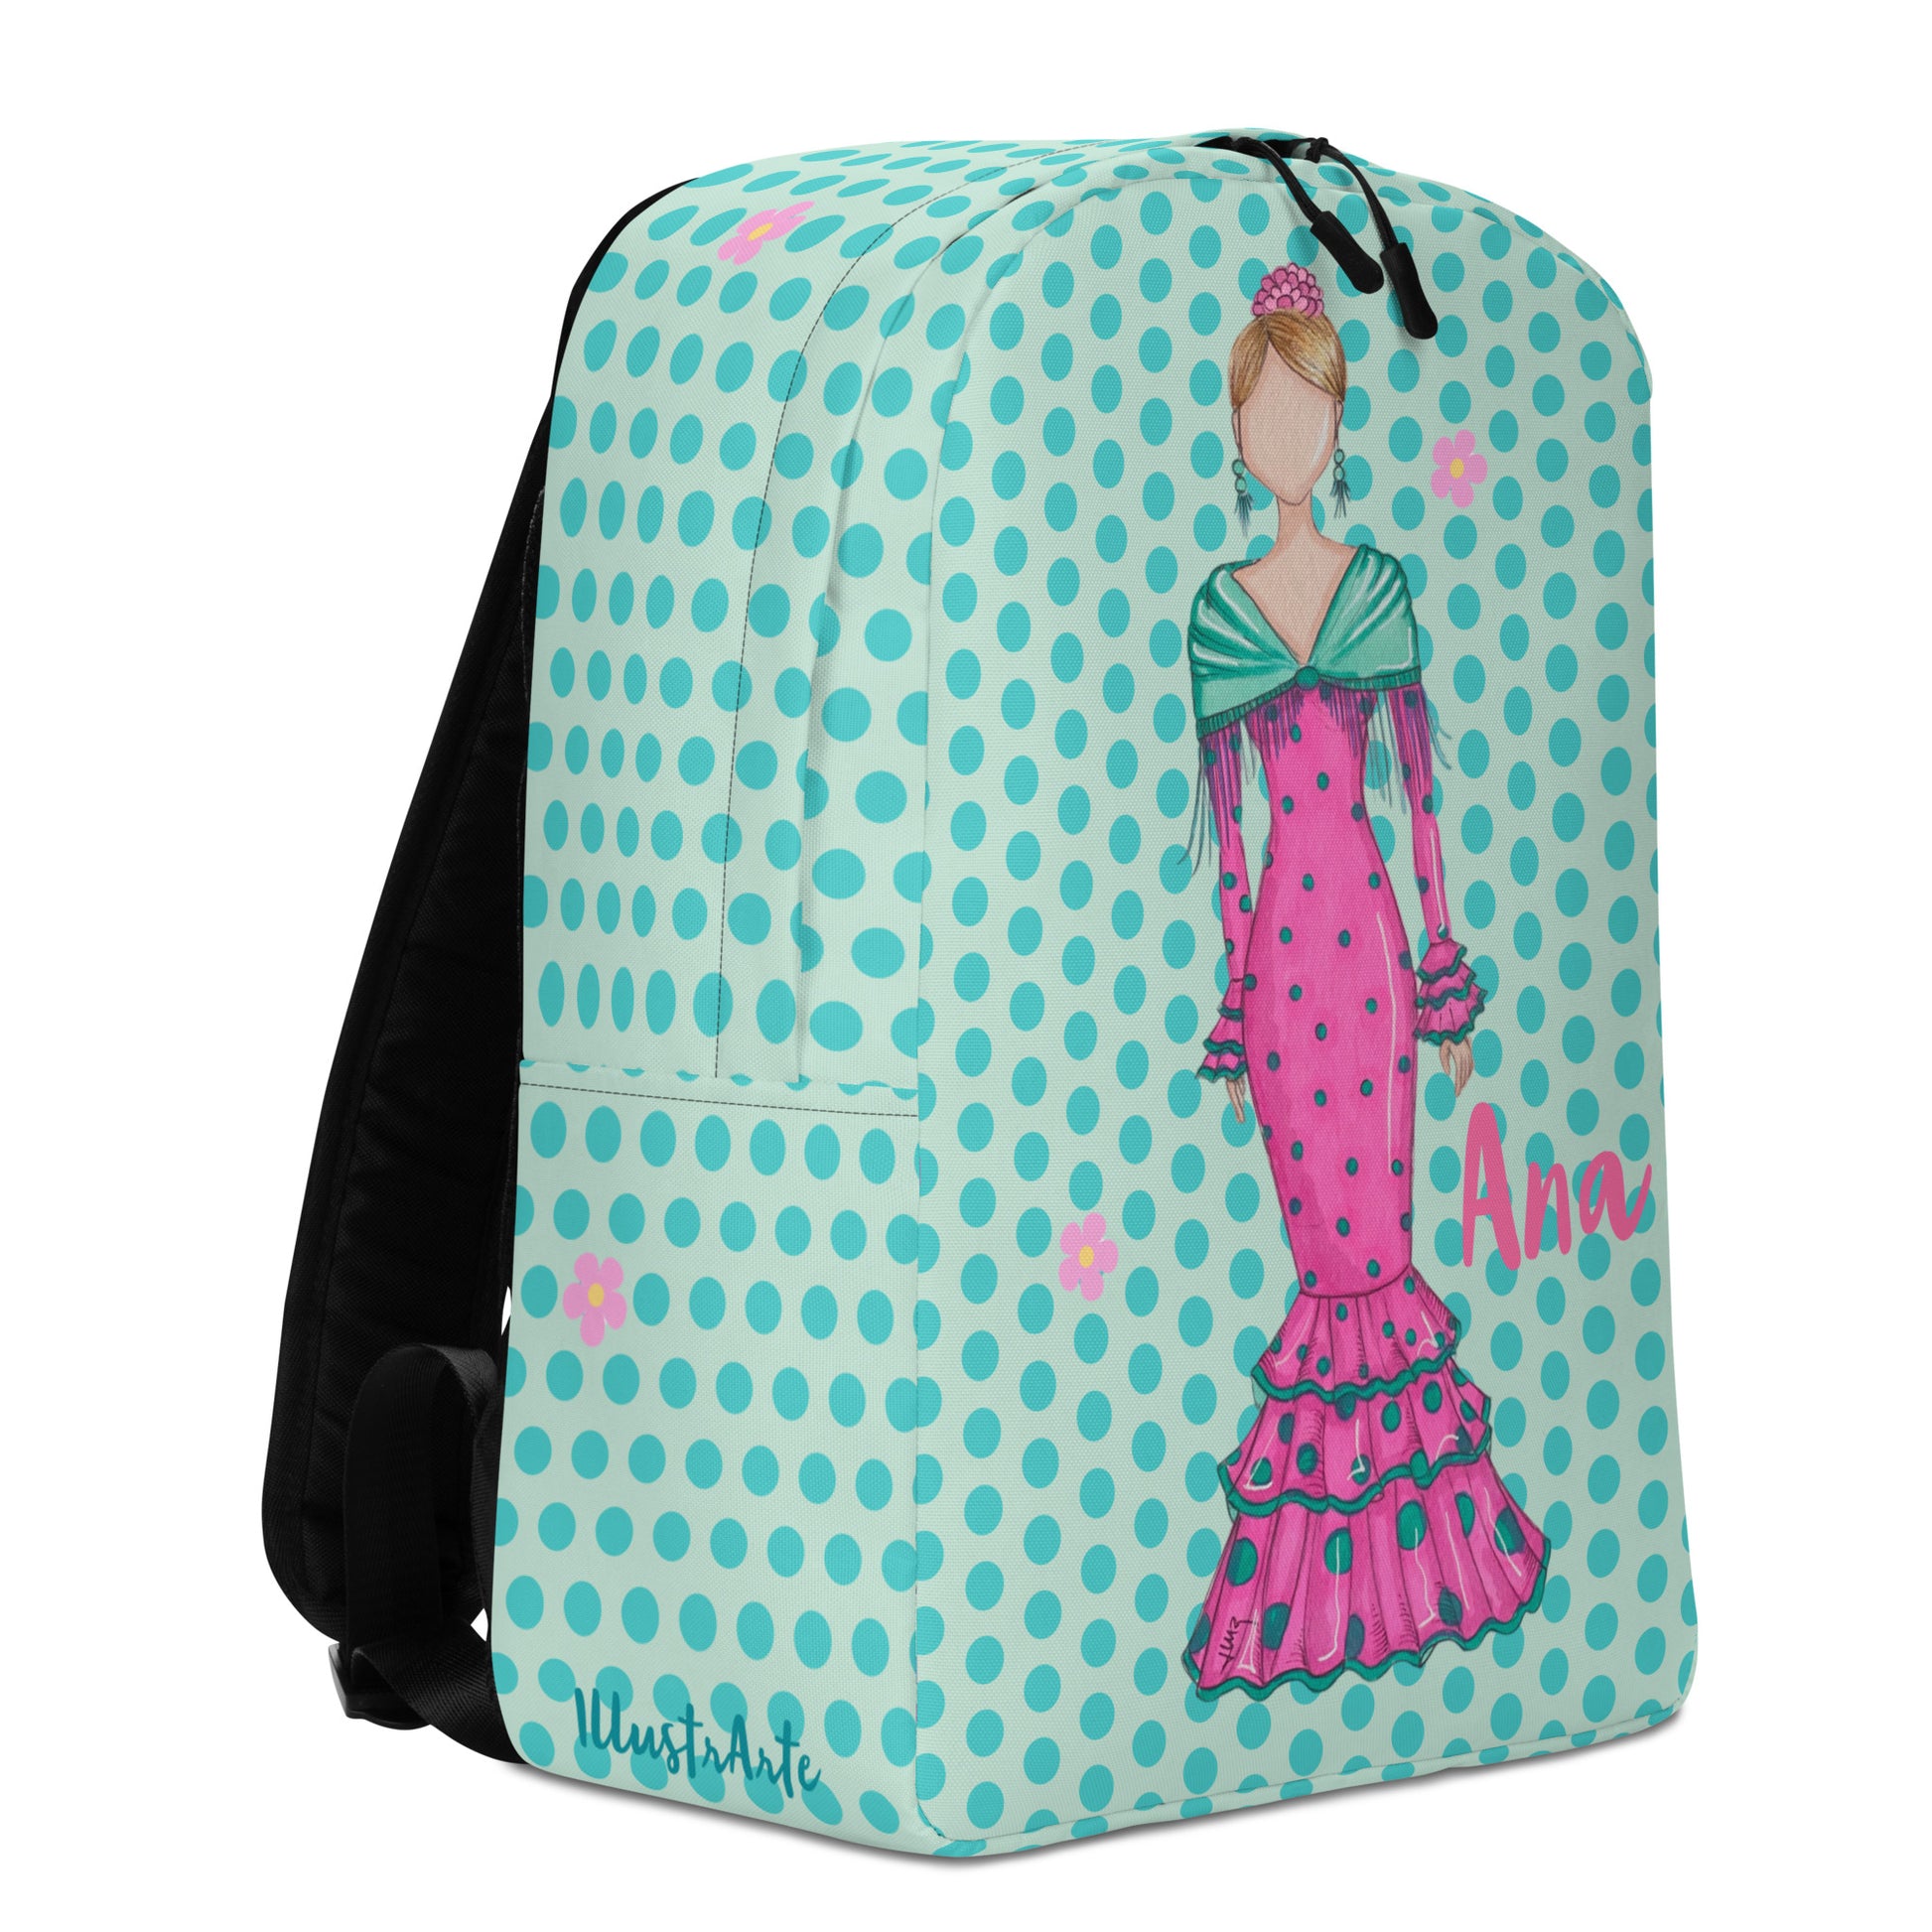 Flamenco Dancer Customizable Backpack, pink dress with a green shawl design. - IllustrArte